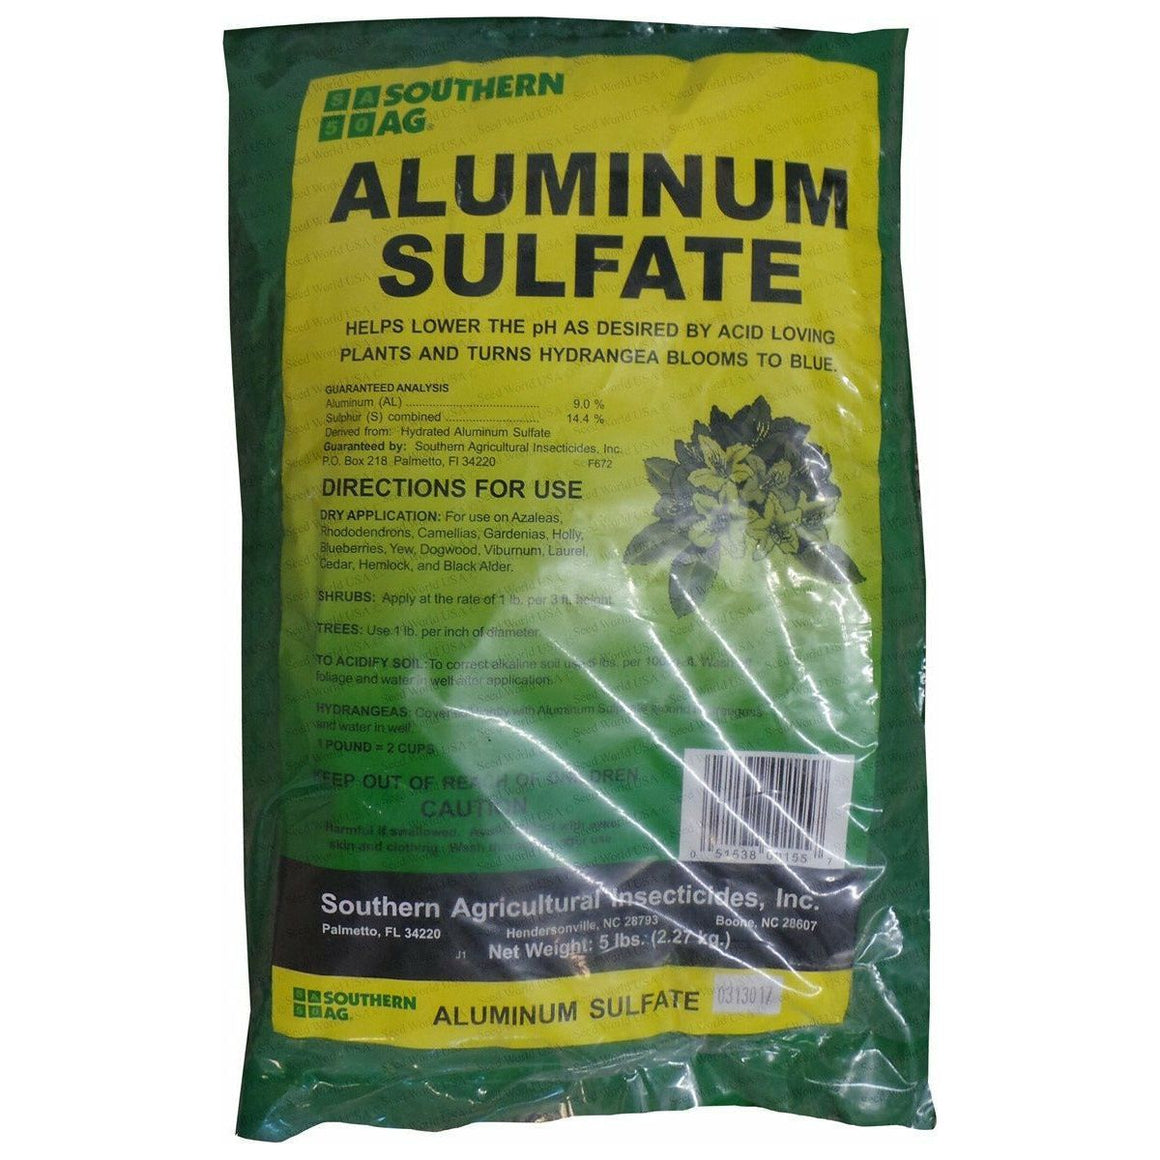 Aluminum Sulfate Fertilizer - 1 Lb. - Seed World